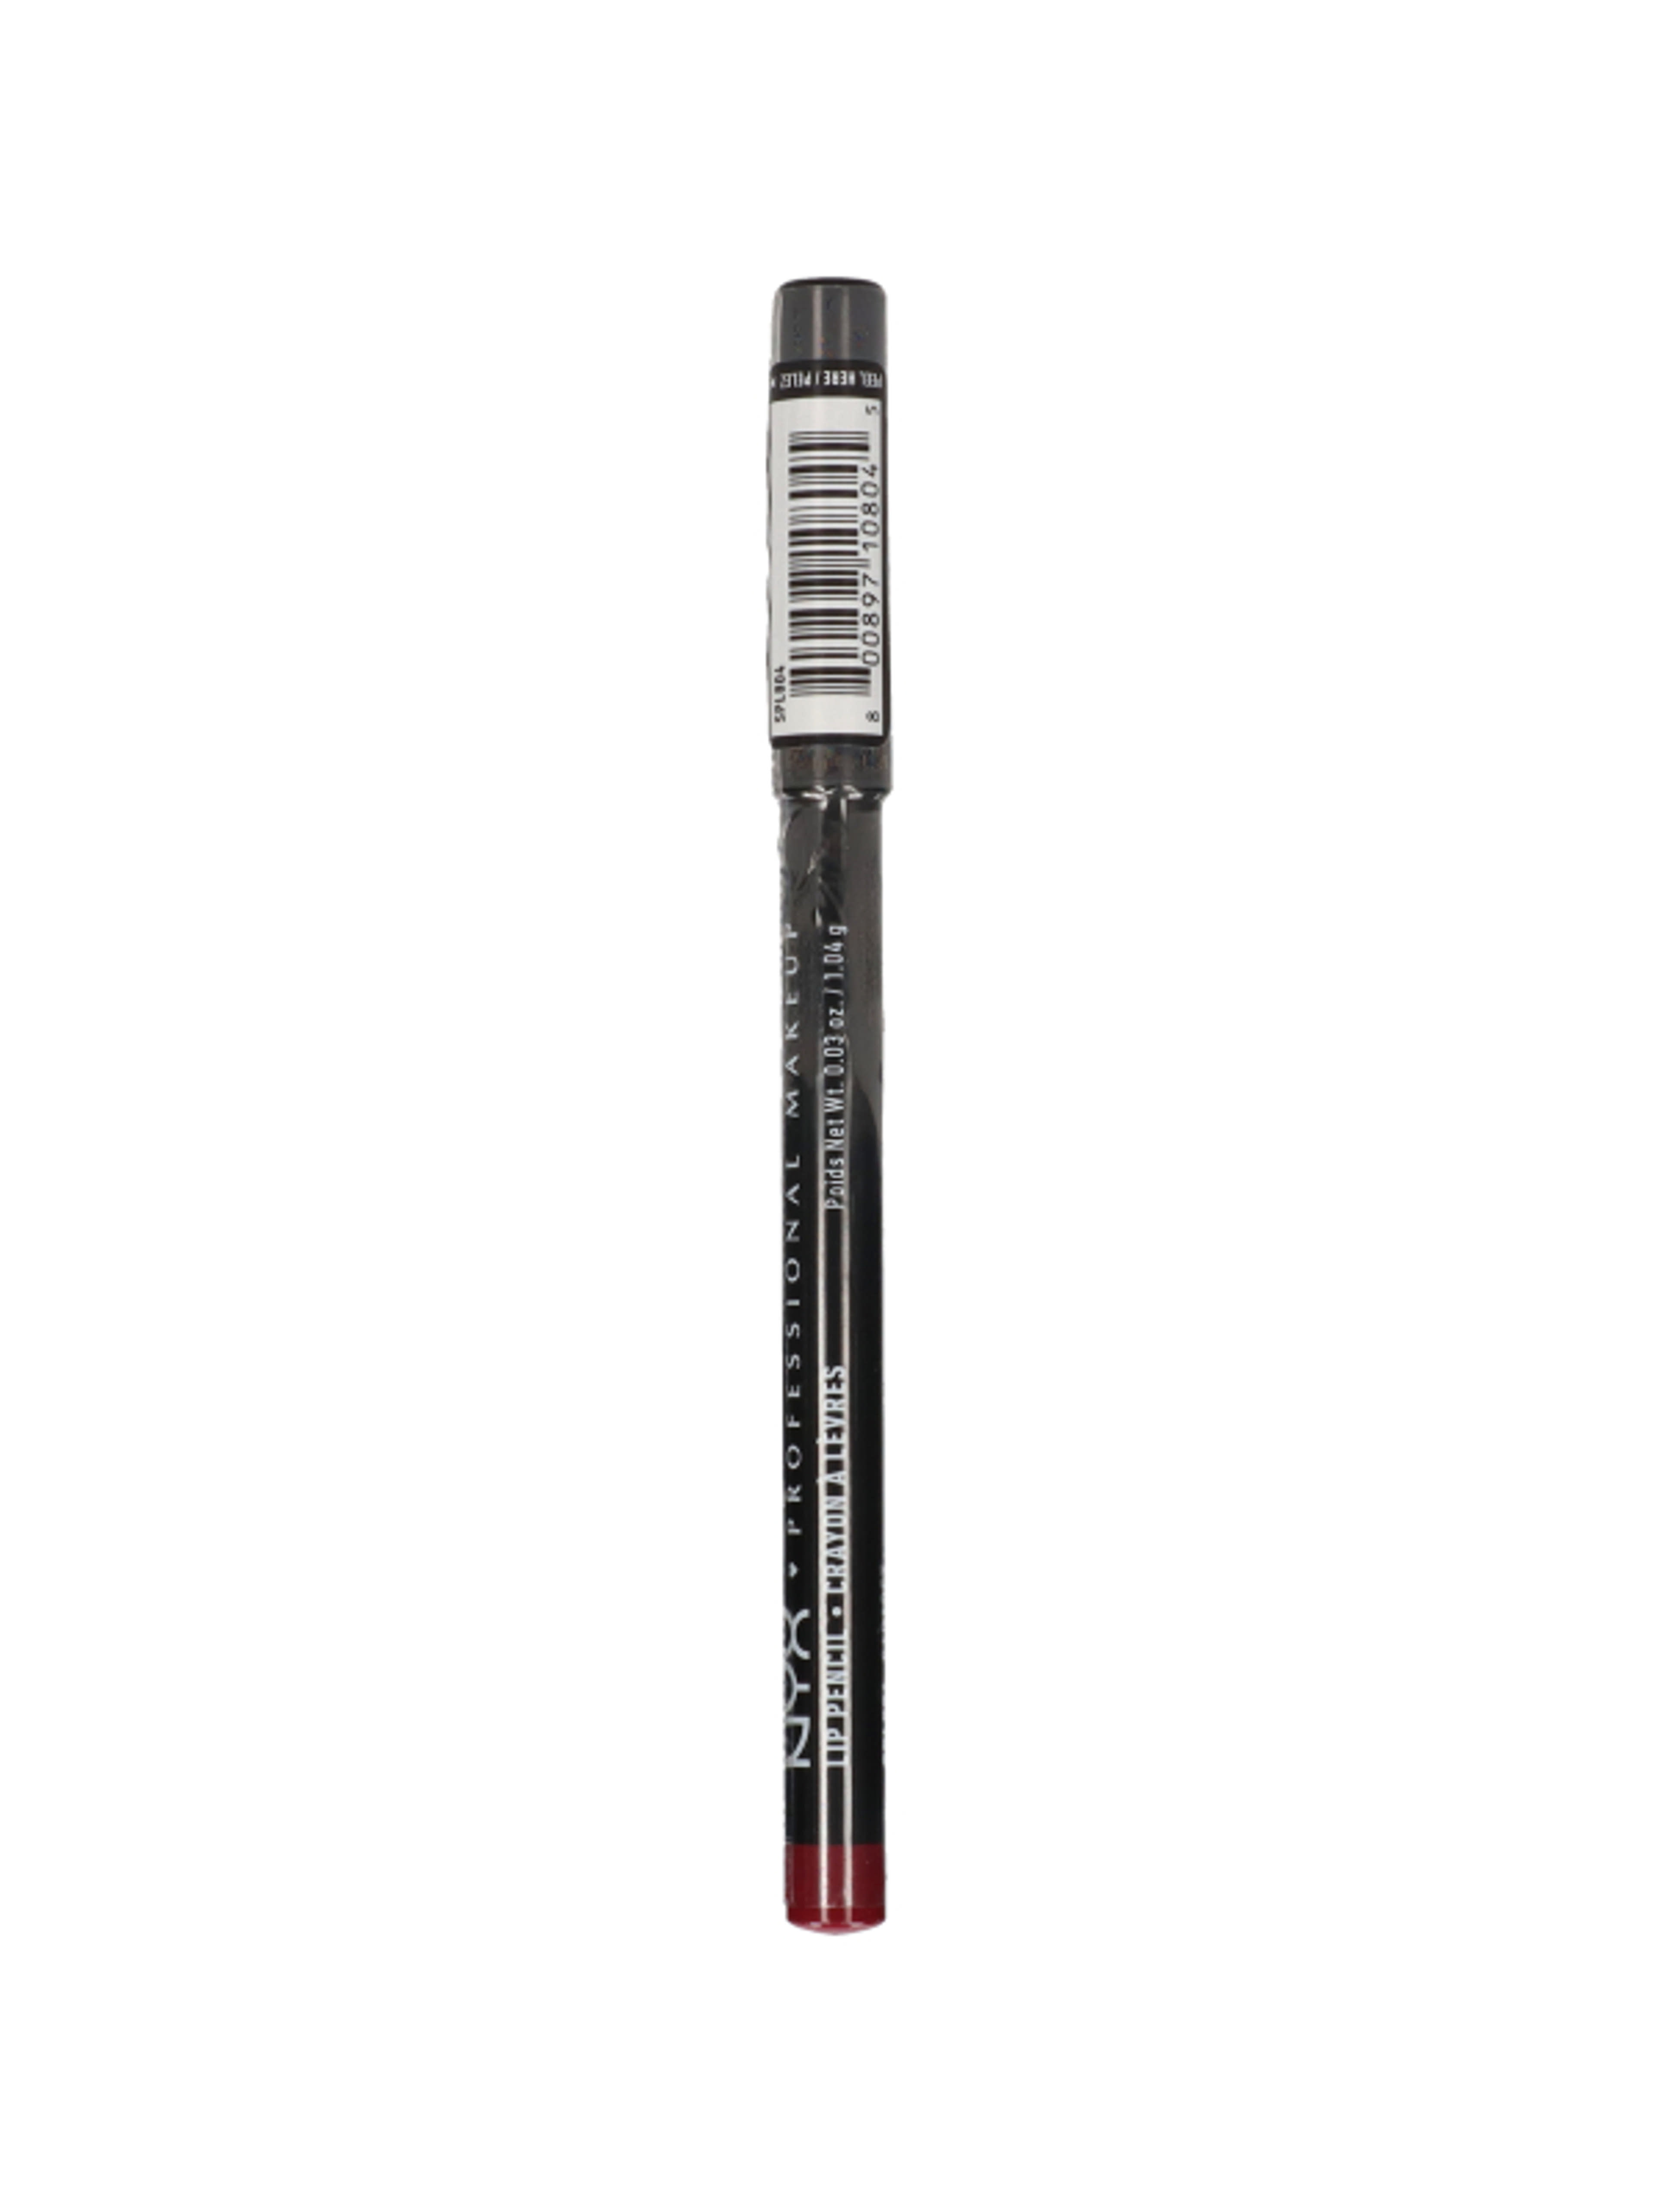 NYX Professional Makeup Slim Lip Pencil ajakkontúr ceruza, Cabaret - 1 db-7